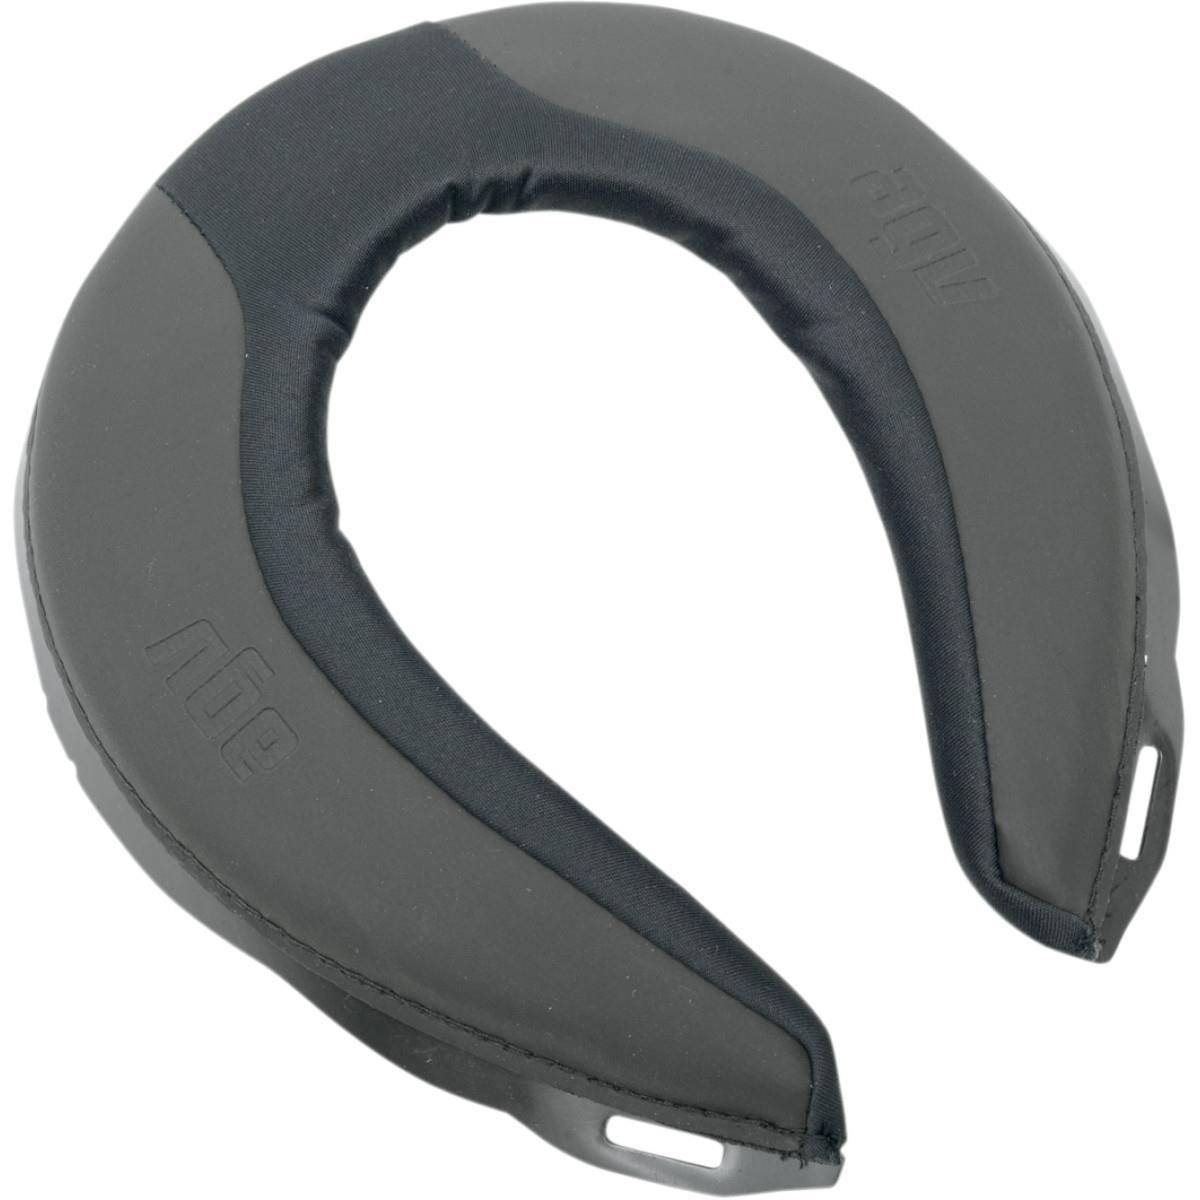 4UN-AGV-KIT03603999 Helmet Neck Roll for T-2 and Grid - Black - 2XL/3XL